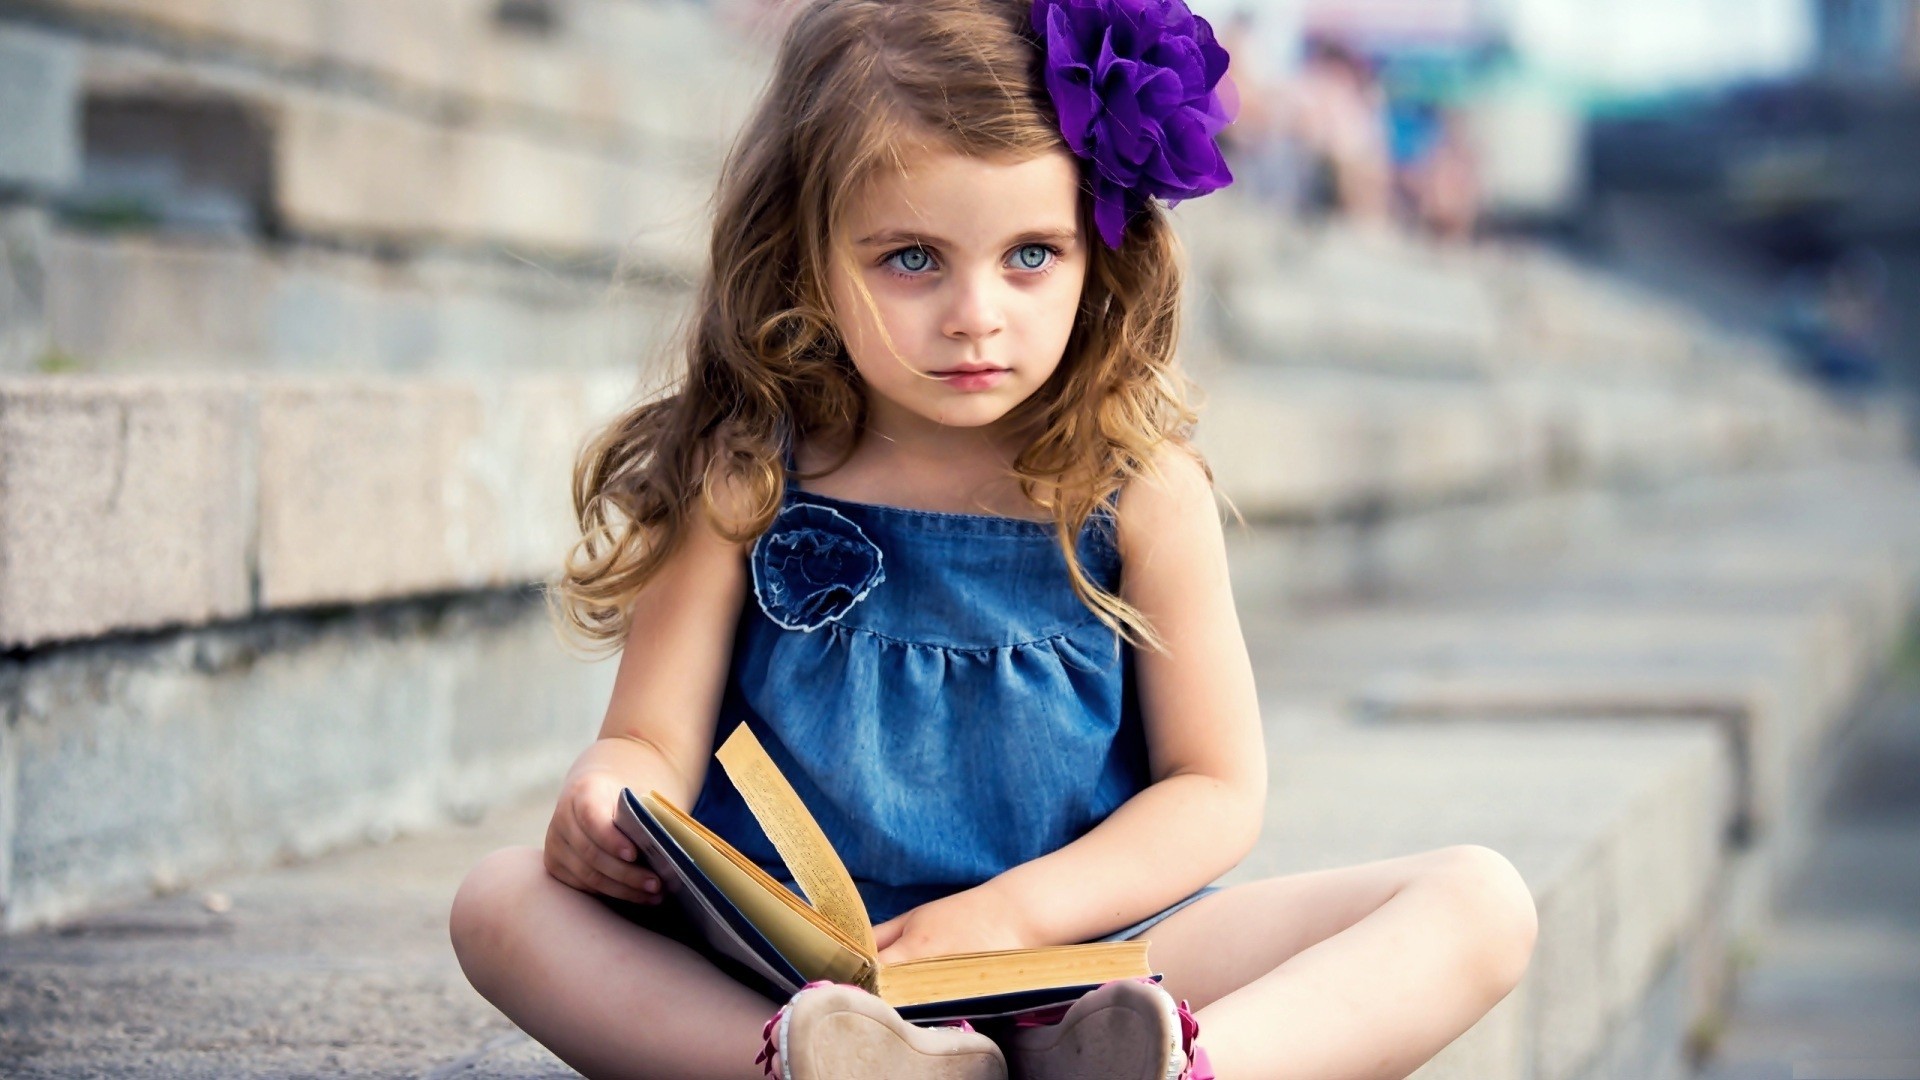 innocent girl wallpaper,child,sitting,hairstyle,child model,street fashion